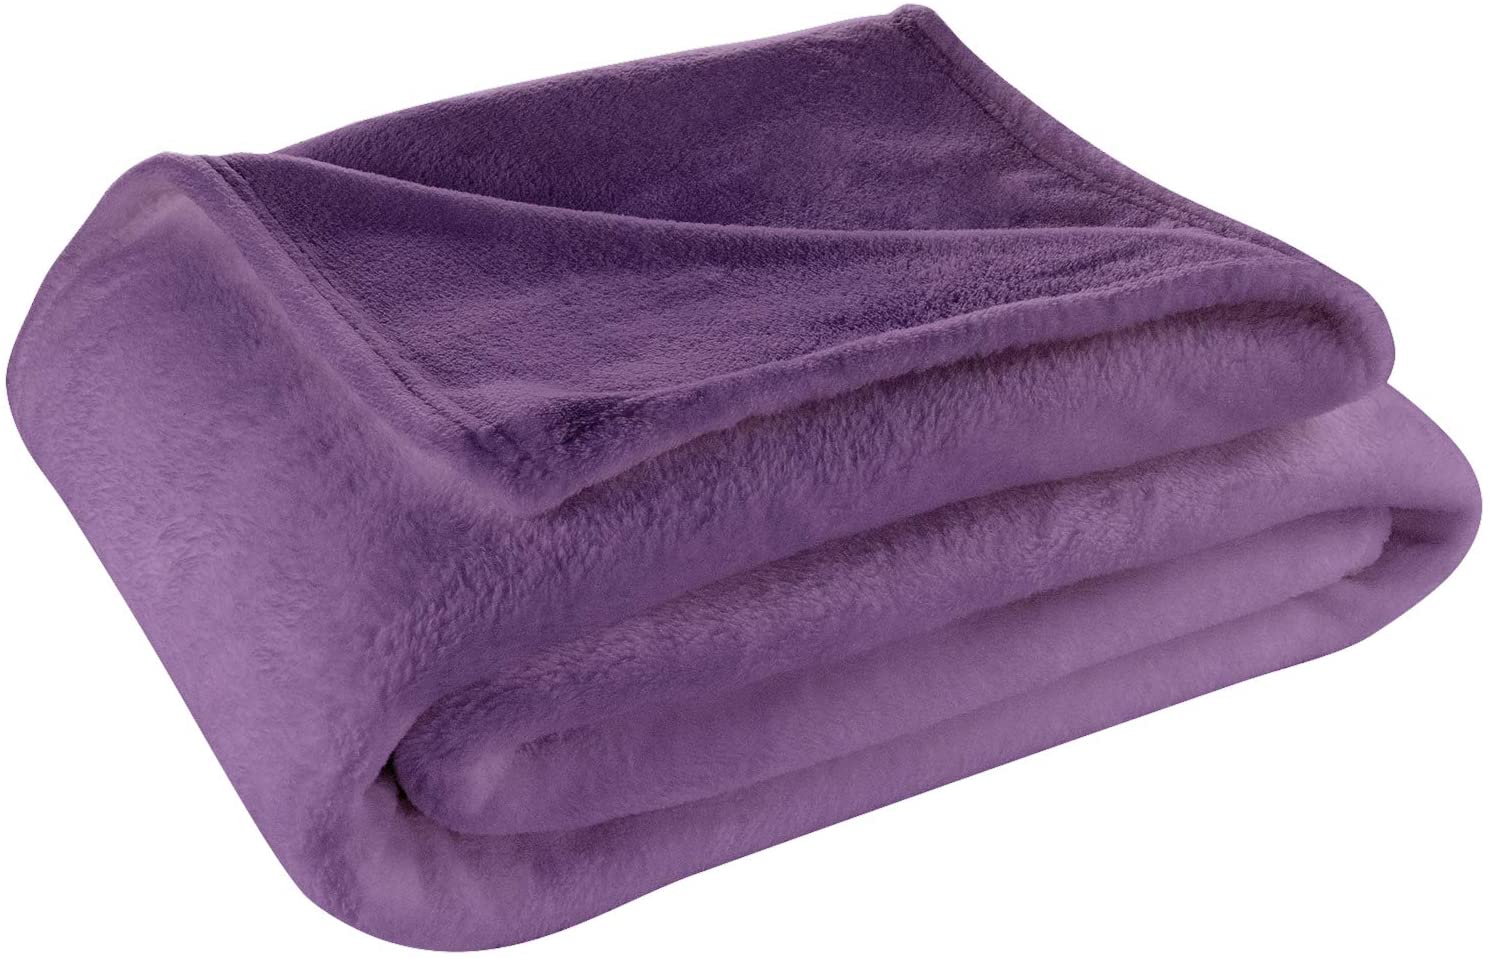 Cosy House Collection Full/Queen Size Fleece Blanket – All Season,  Lightweight & | eBay